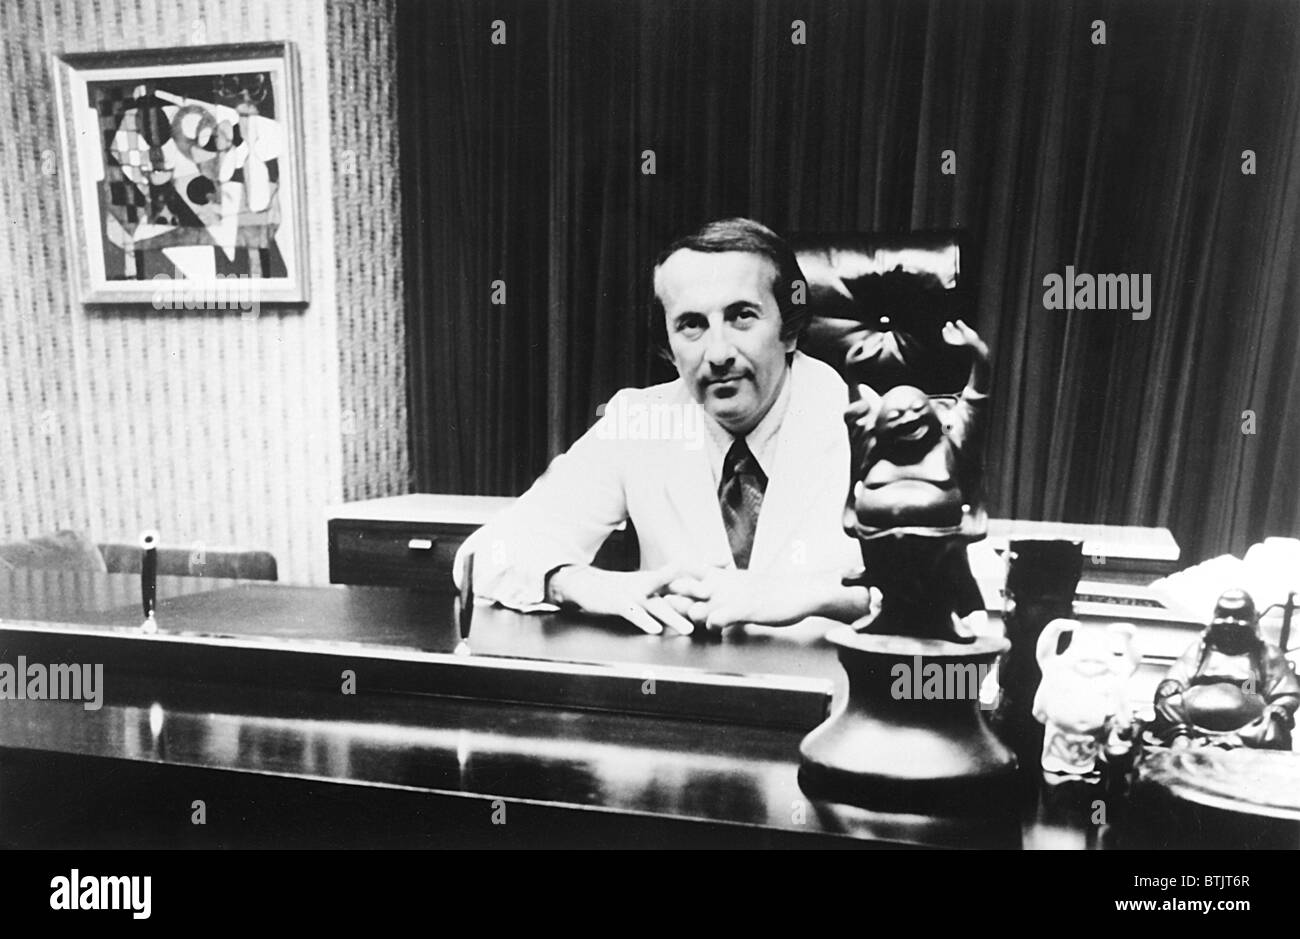 DR. ROBERT ATKINS, author of DR. ATKINS'S DIET REVOLUTION, c. 1973 Stock Photo